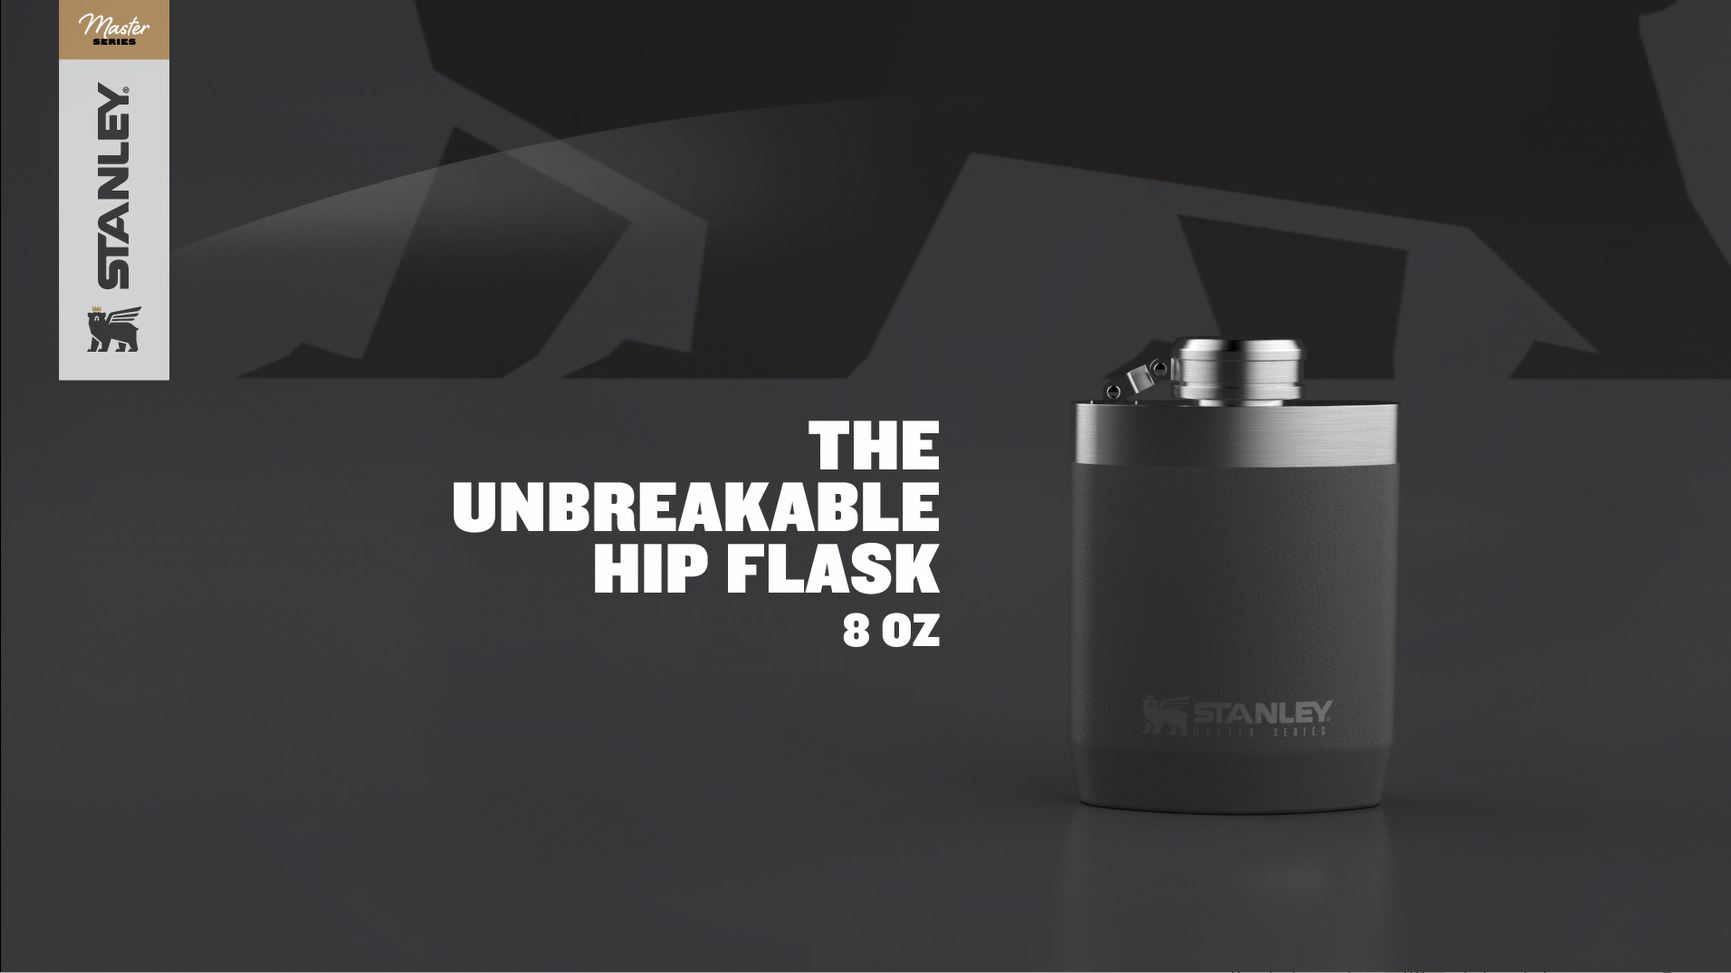 Stanley Master Unbreakable Hip Flask - image 2 of 4